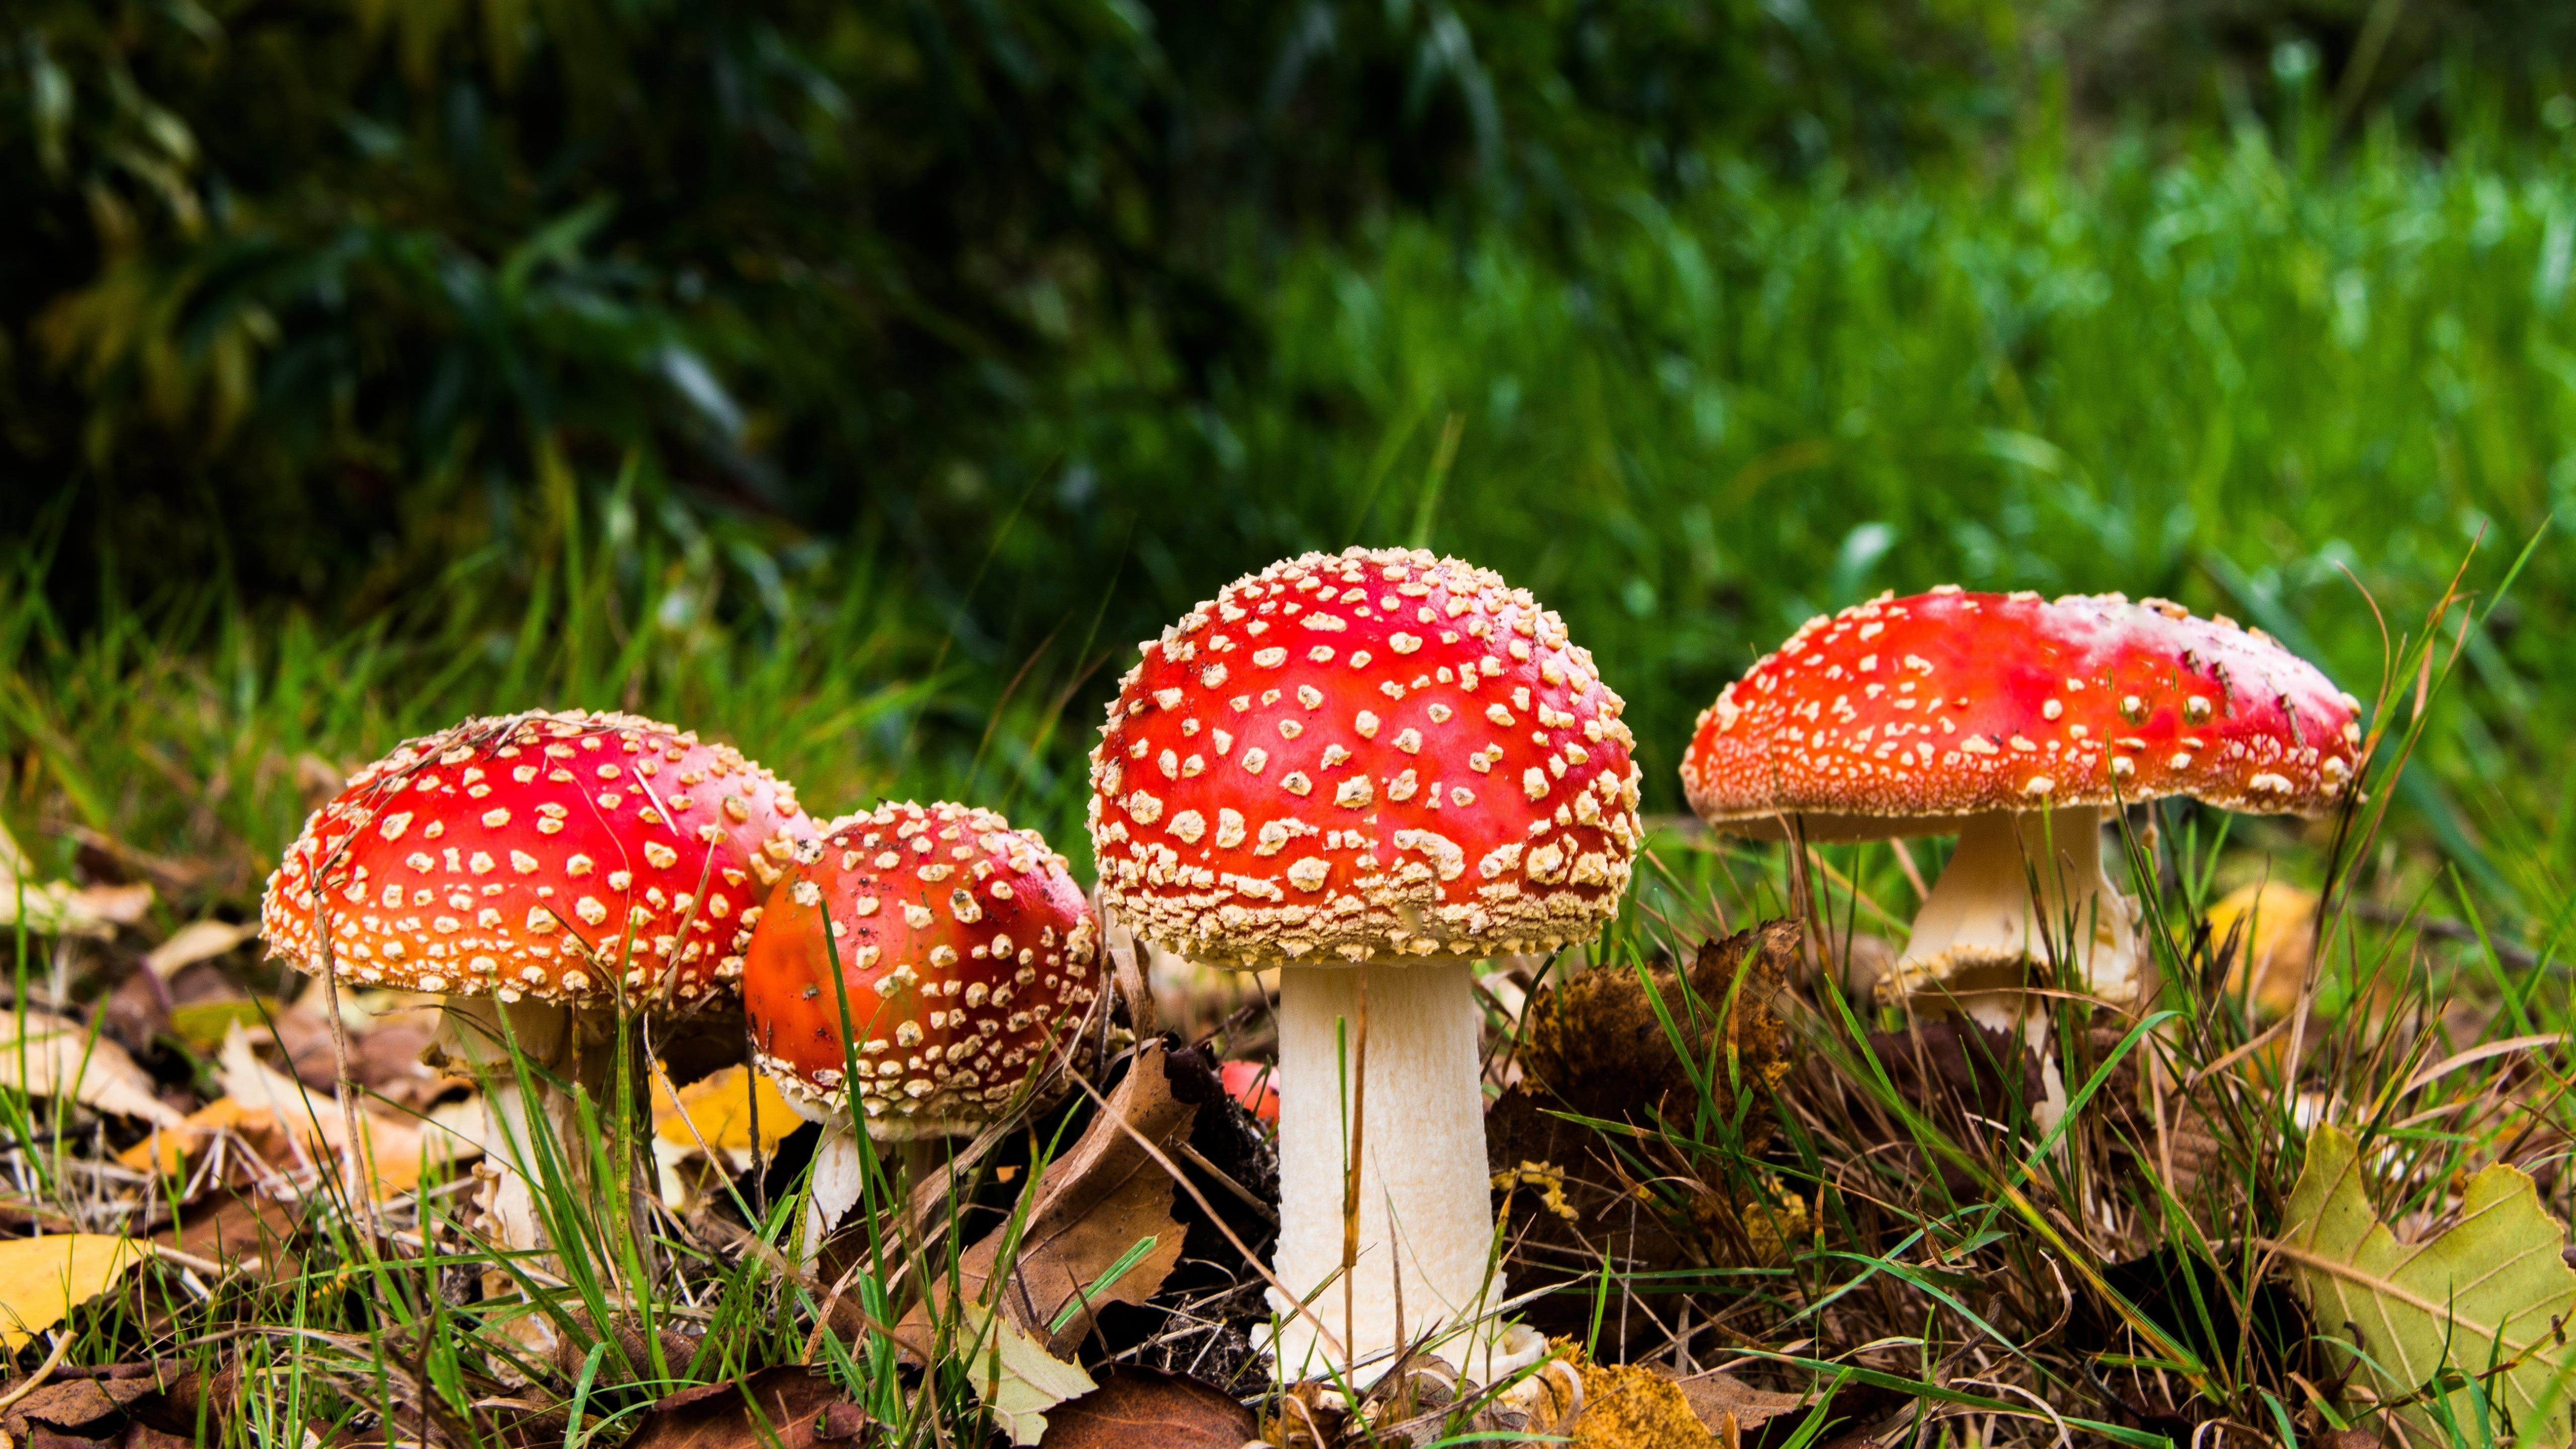 mushroom, mushrooms, fly agaric, fungus, amantia muscaria, psychoactive